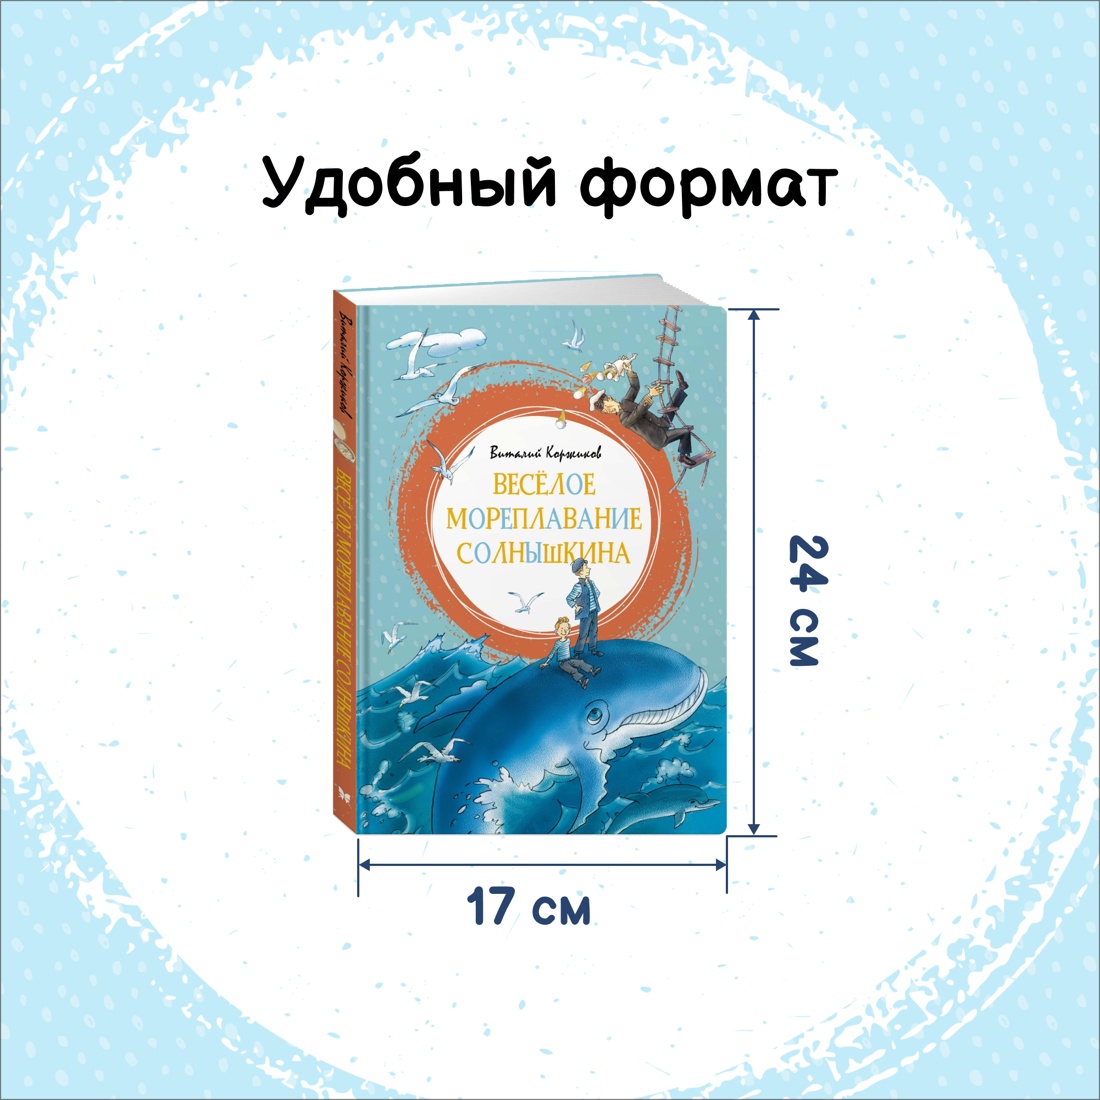 Промо материал к книге "Весёлое мореплавание Солнышкина" №1